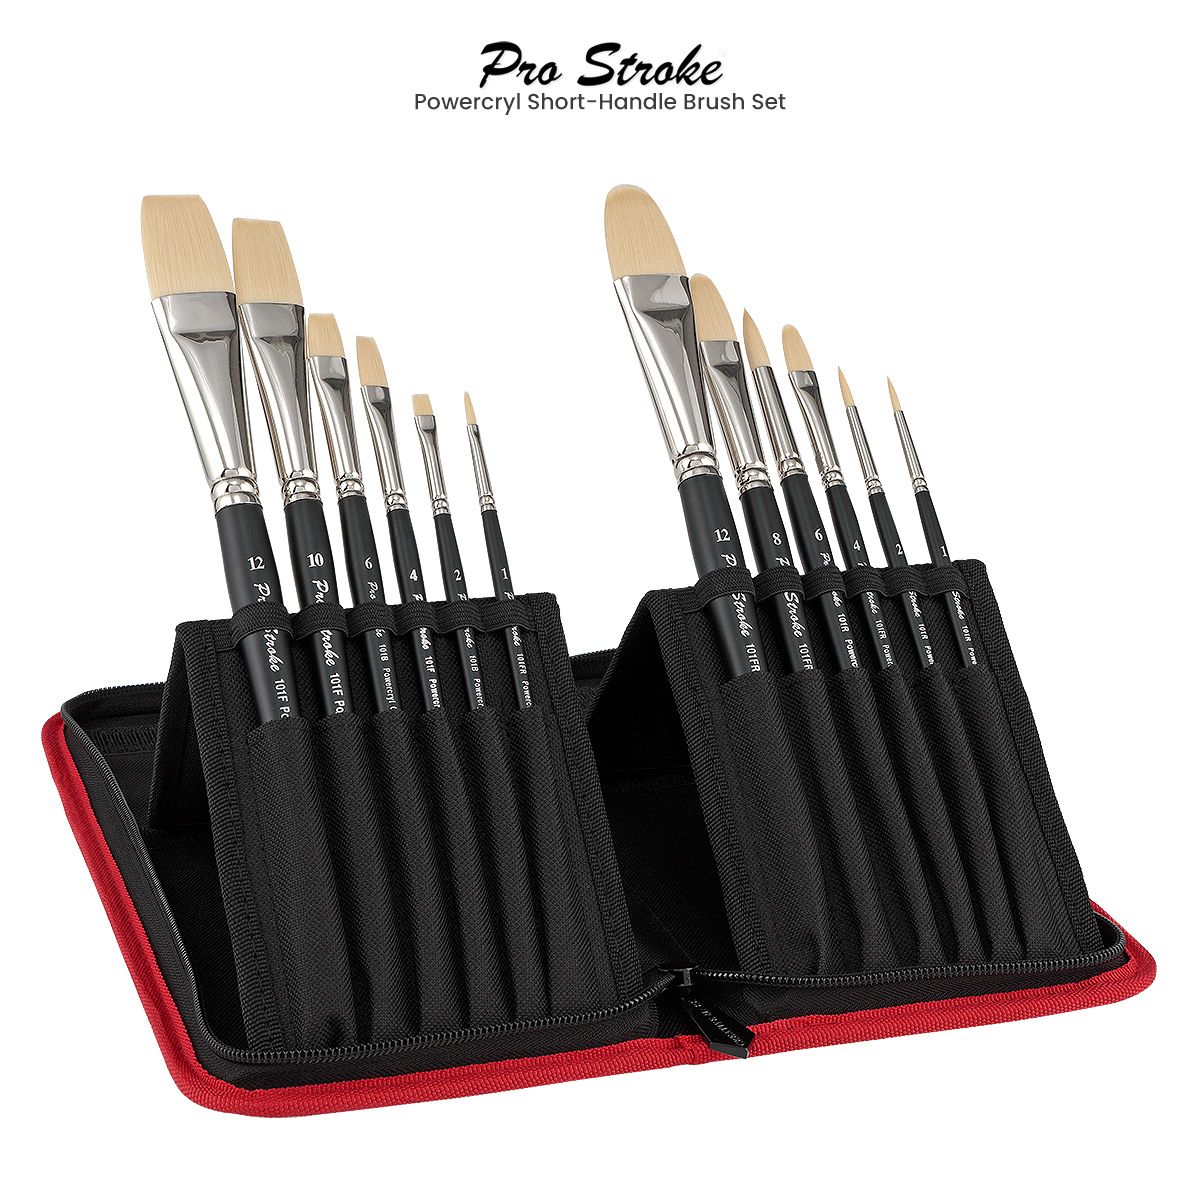 Pro Stroke Powercryl Short-Handle Brush Set of 12